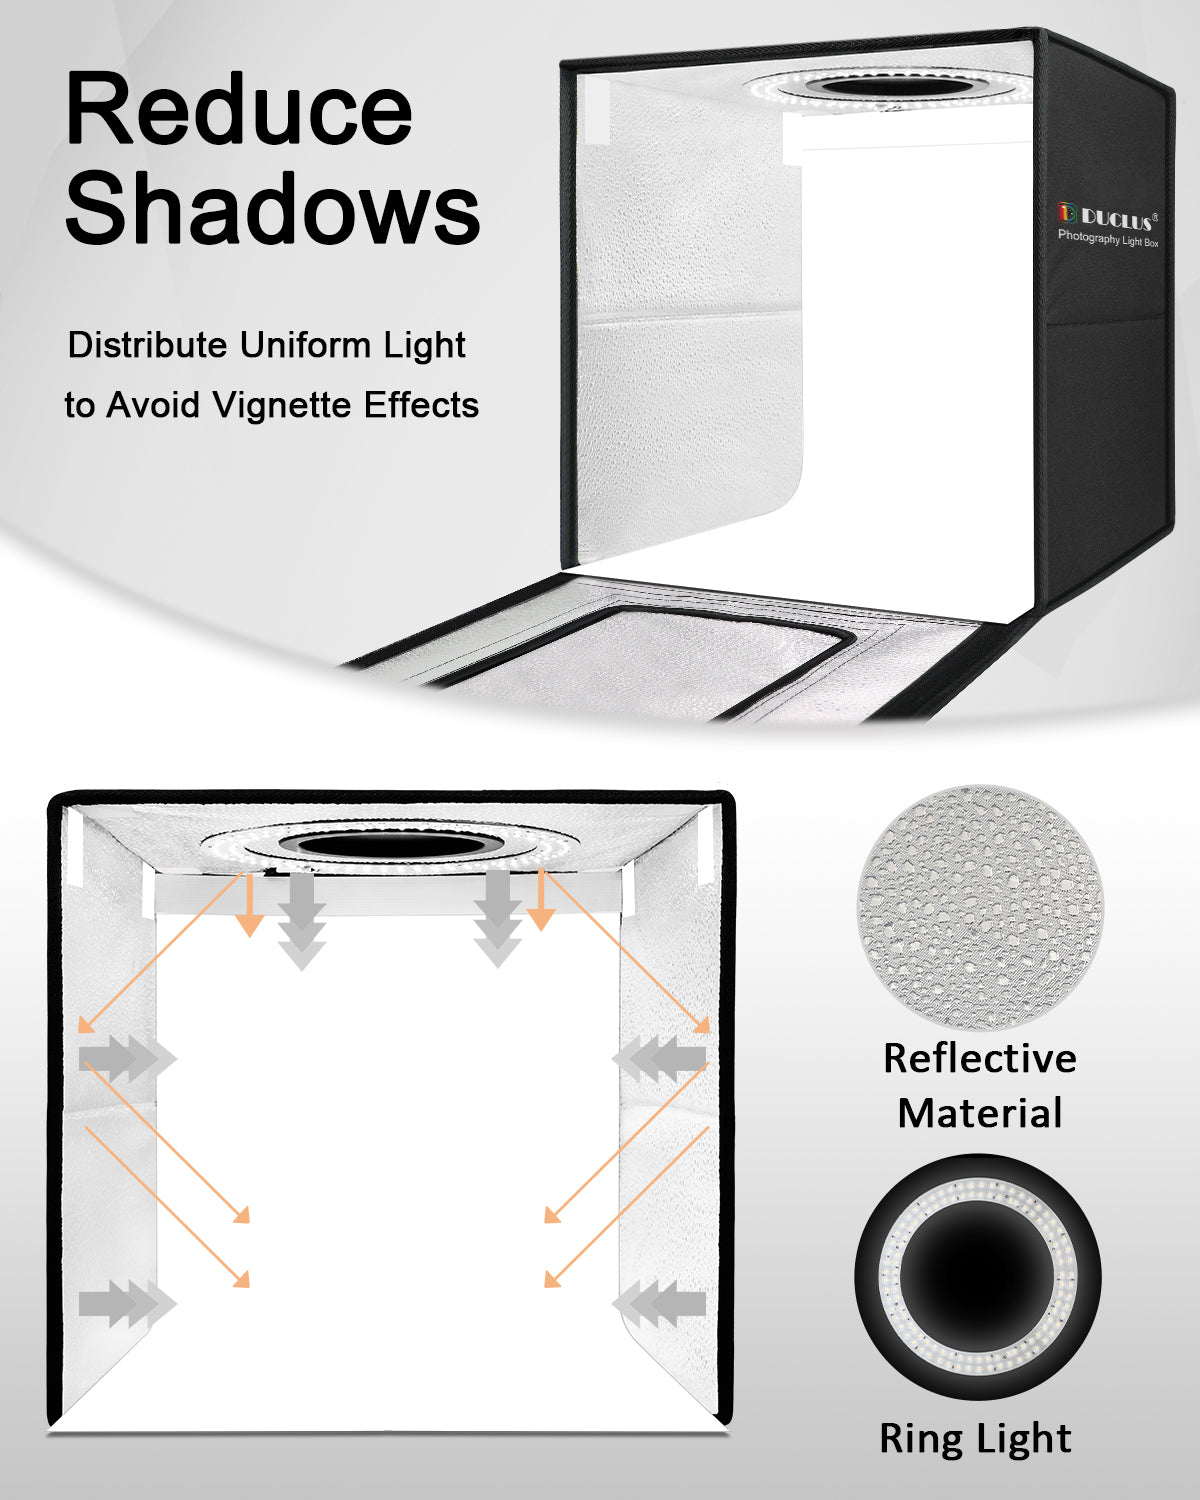 DUCLUS Mini Photo Studio Light Box,Portable Folding Photography Light Tent  kit with 40pcs LED Light + 6 Kinds Color Backgrounds for Small Size